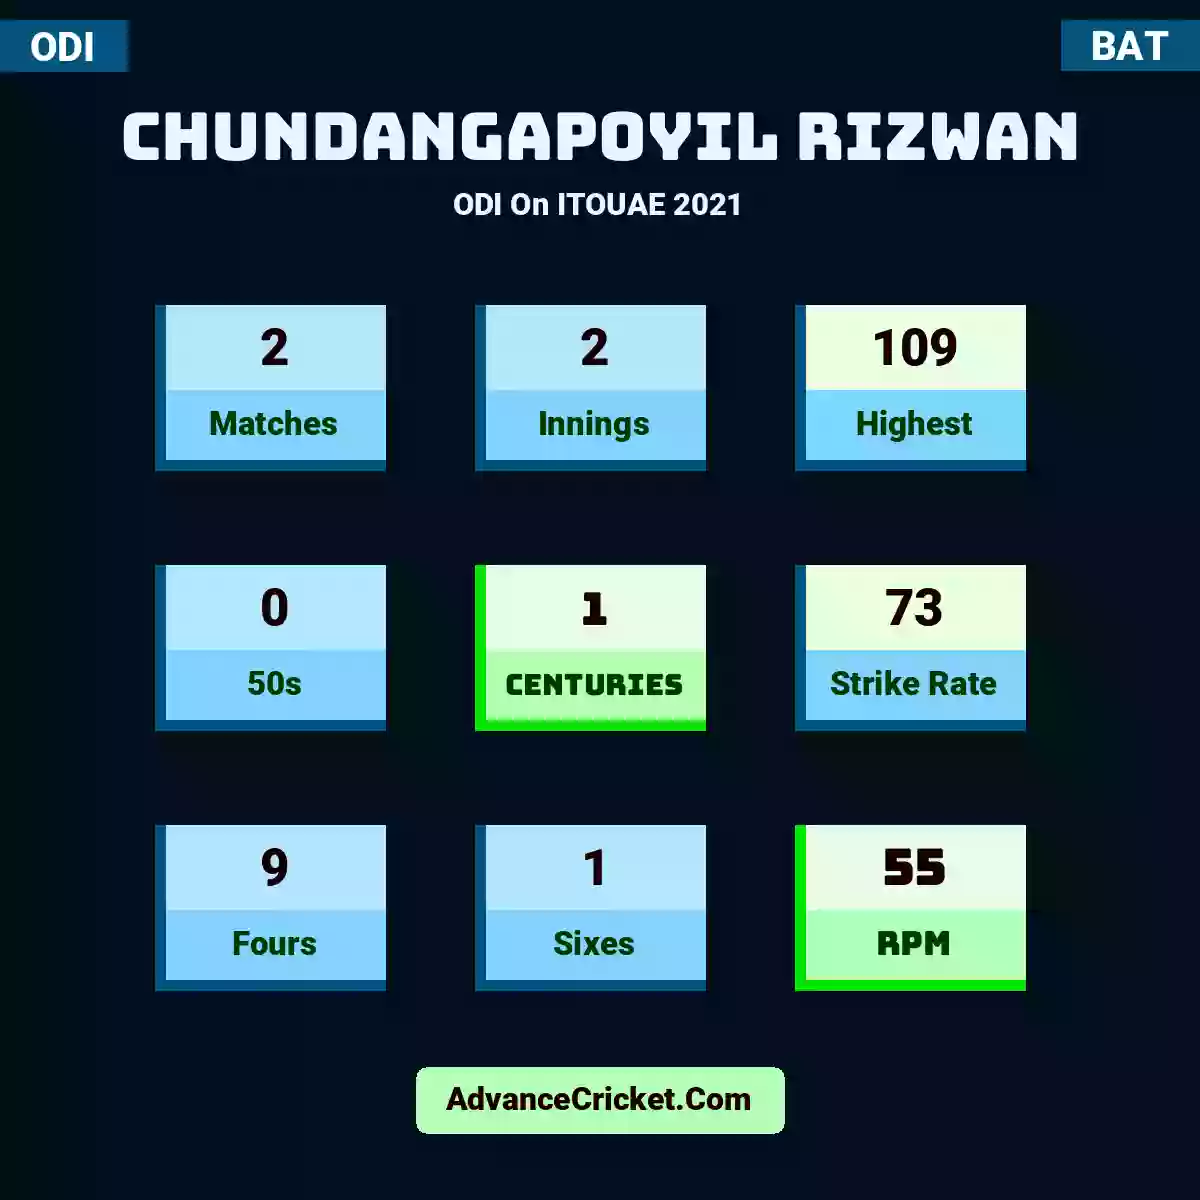 Chundangapoyil Rizwan ODI  On ITOUAE 2021, Chundangapoyil Rizwan played 2 matches, scored 109 runs as highest, 0 half-centuries, and 1 centuries, with a strike rate of 73. C.Rizwan hit 9 fours and 1 sixes, with an RPM of 55.